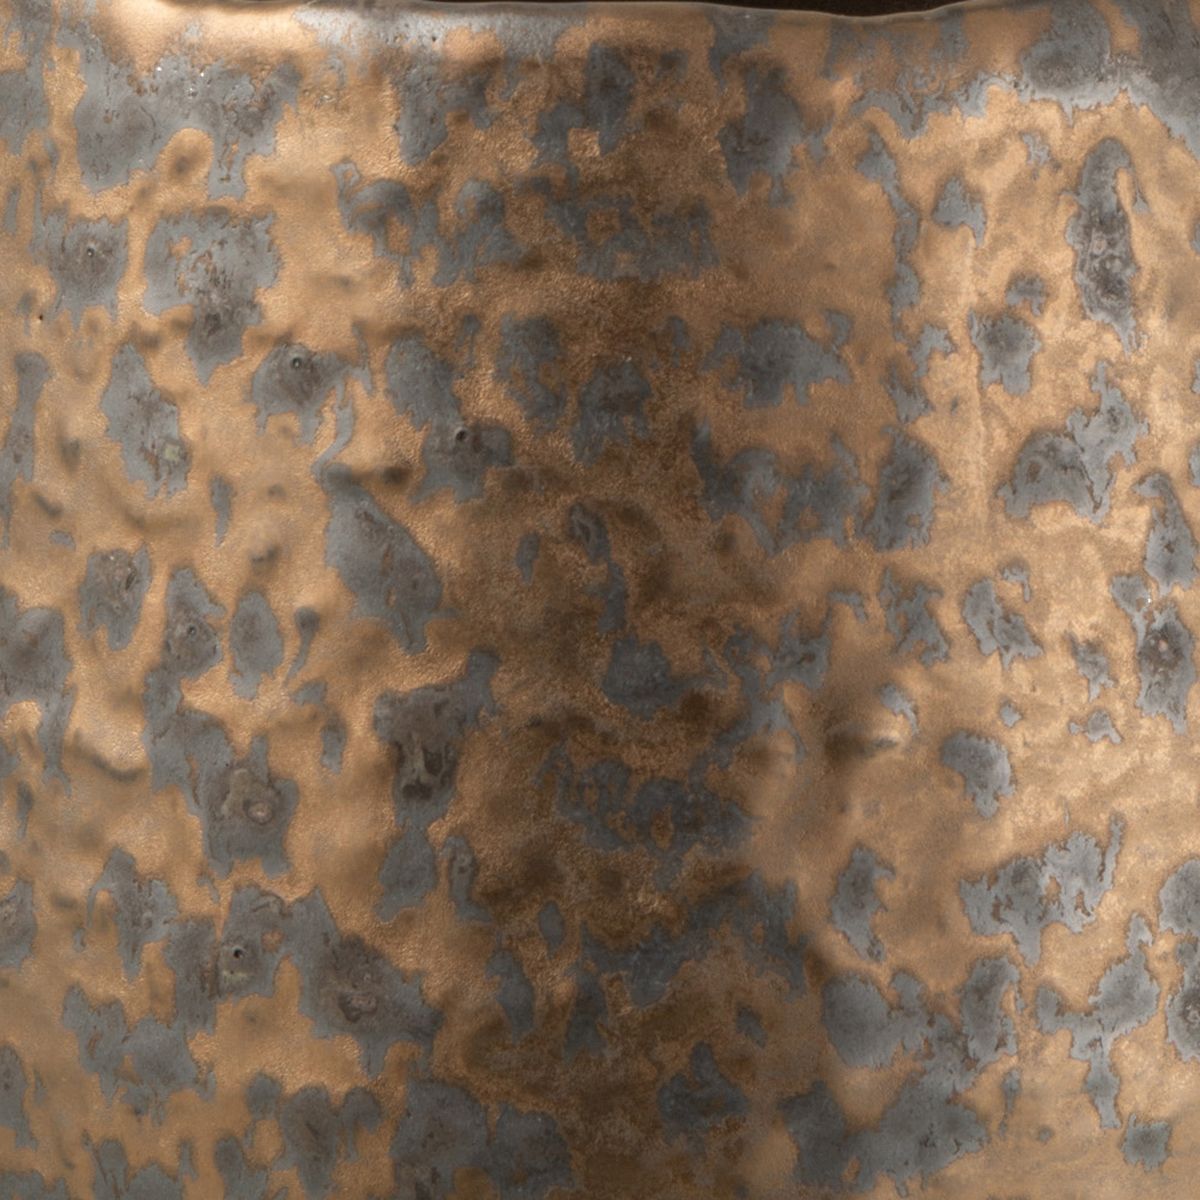 Copper ceramic pot cover